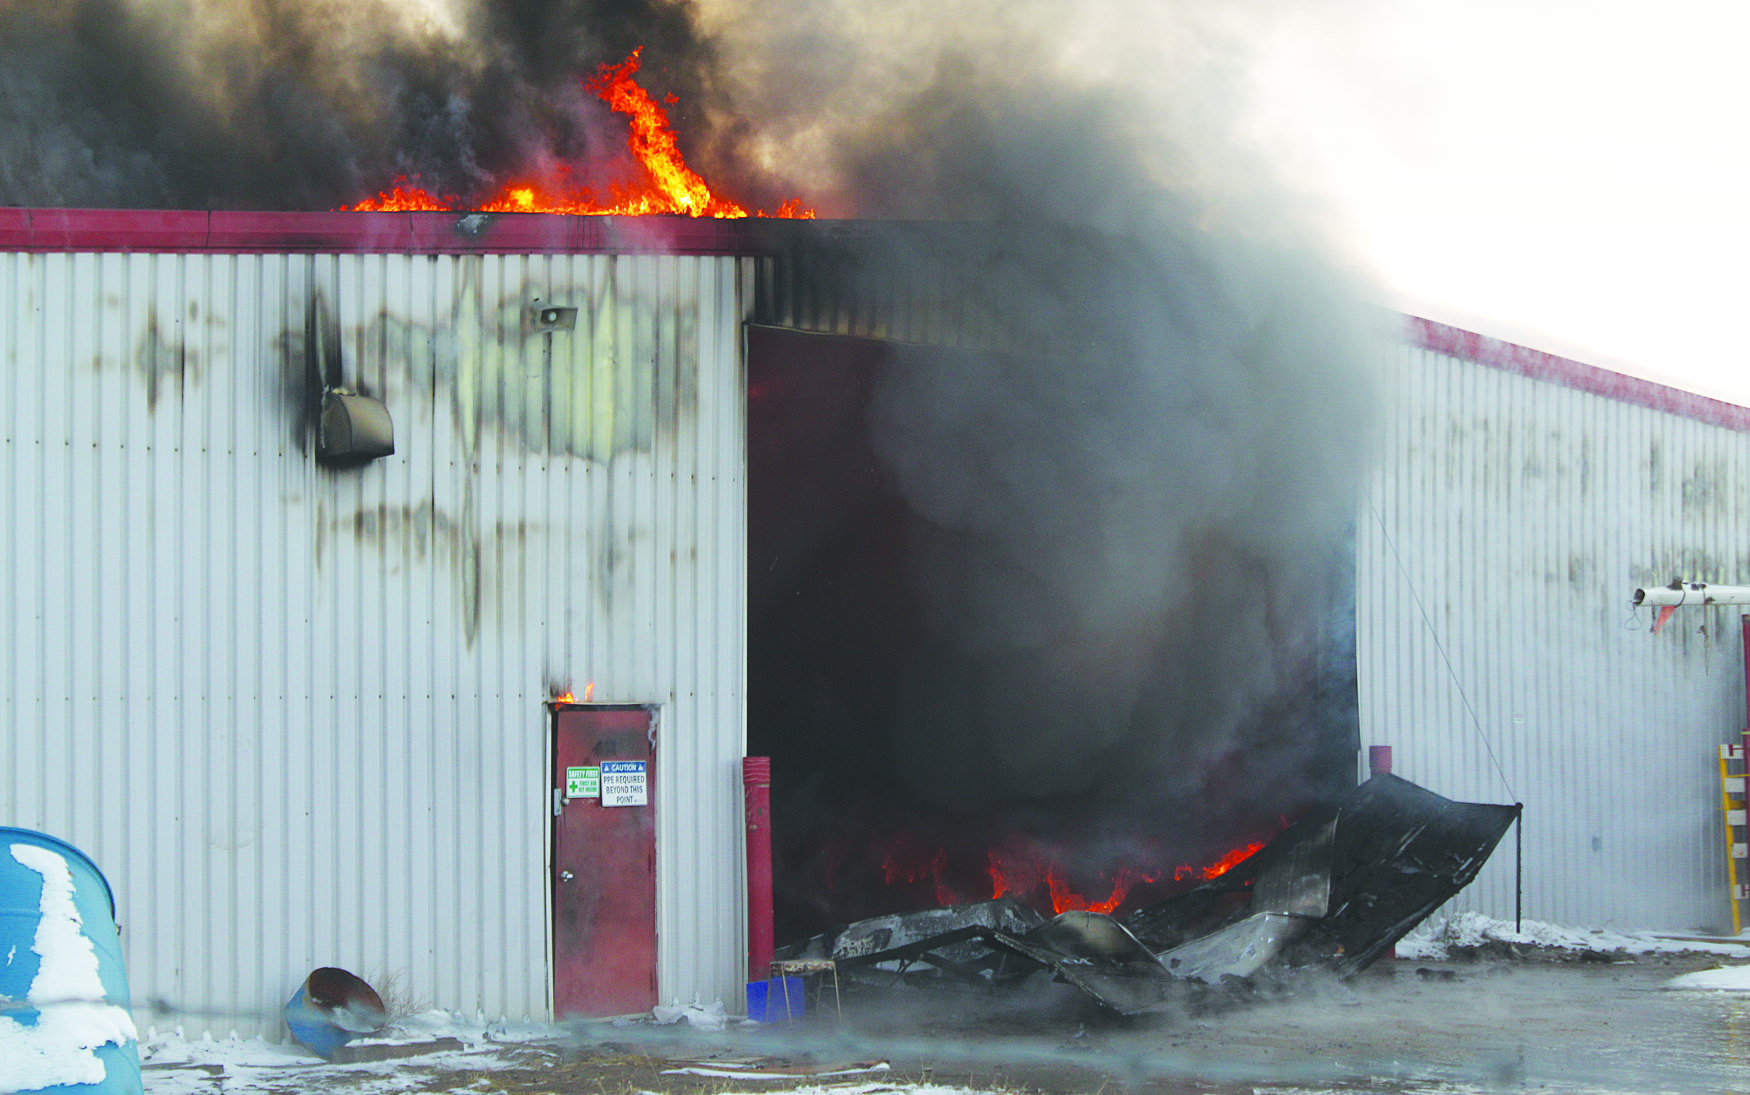 Fire destroys building in industrial area